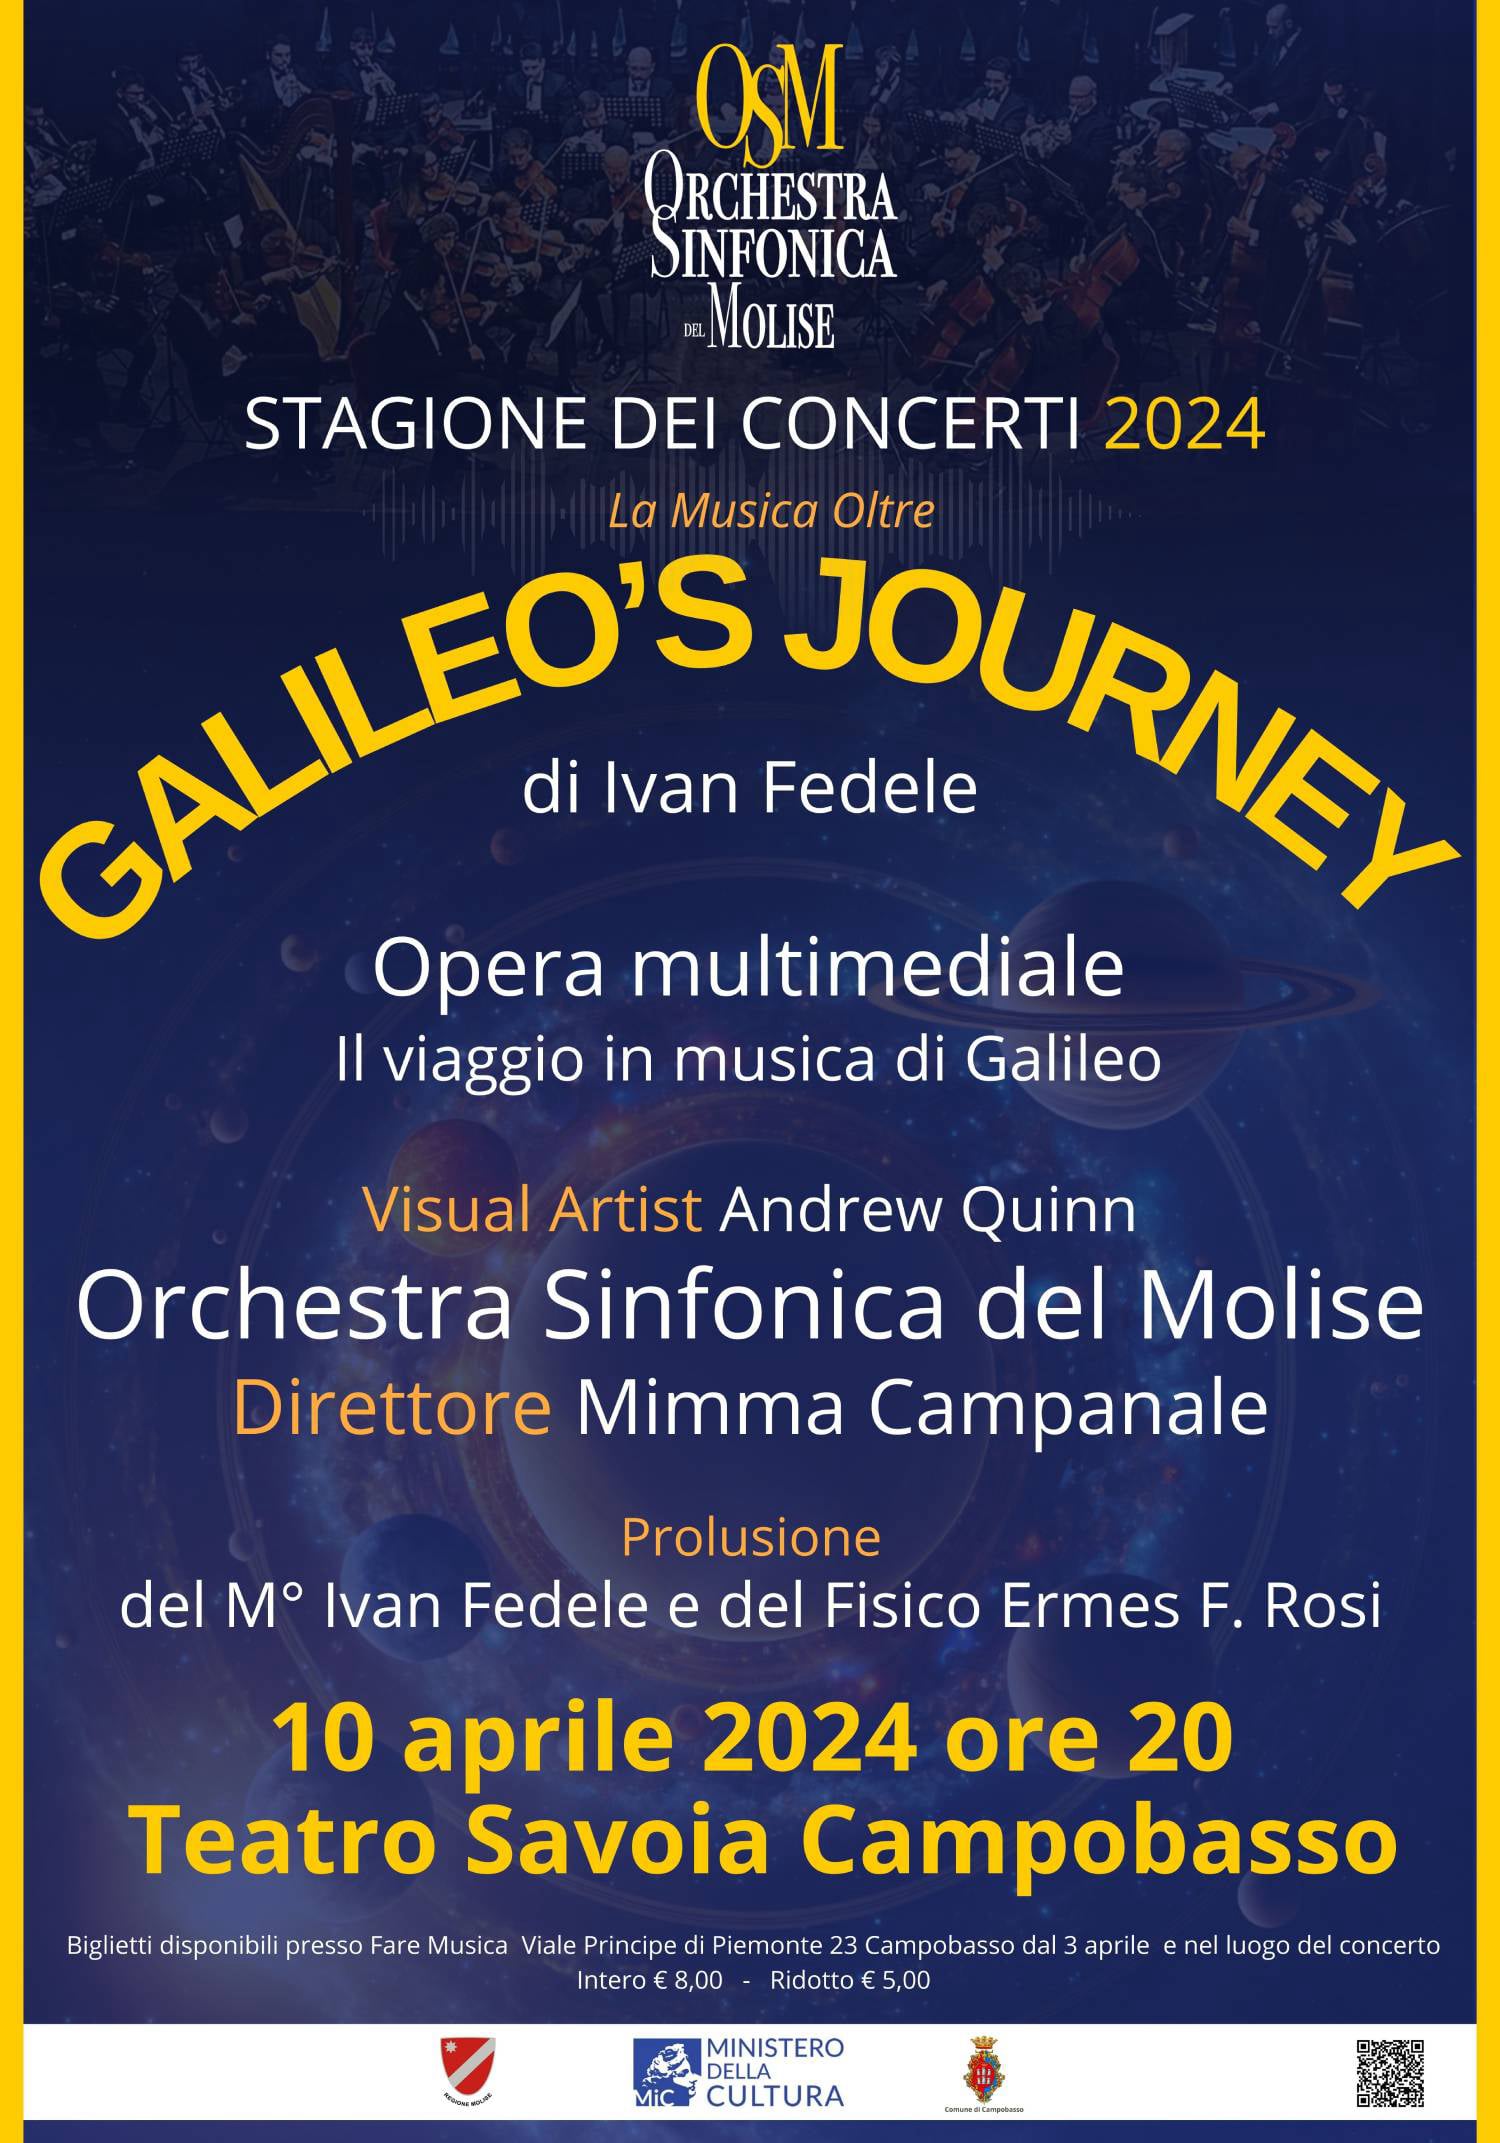 OSM Stagione Concertistica 2024 - GALILEO'S JOURNEY